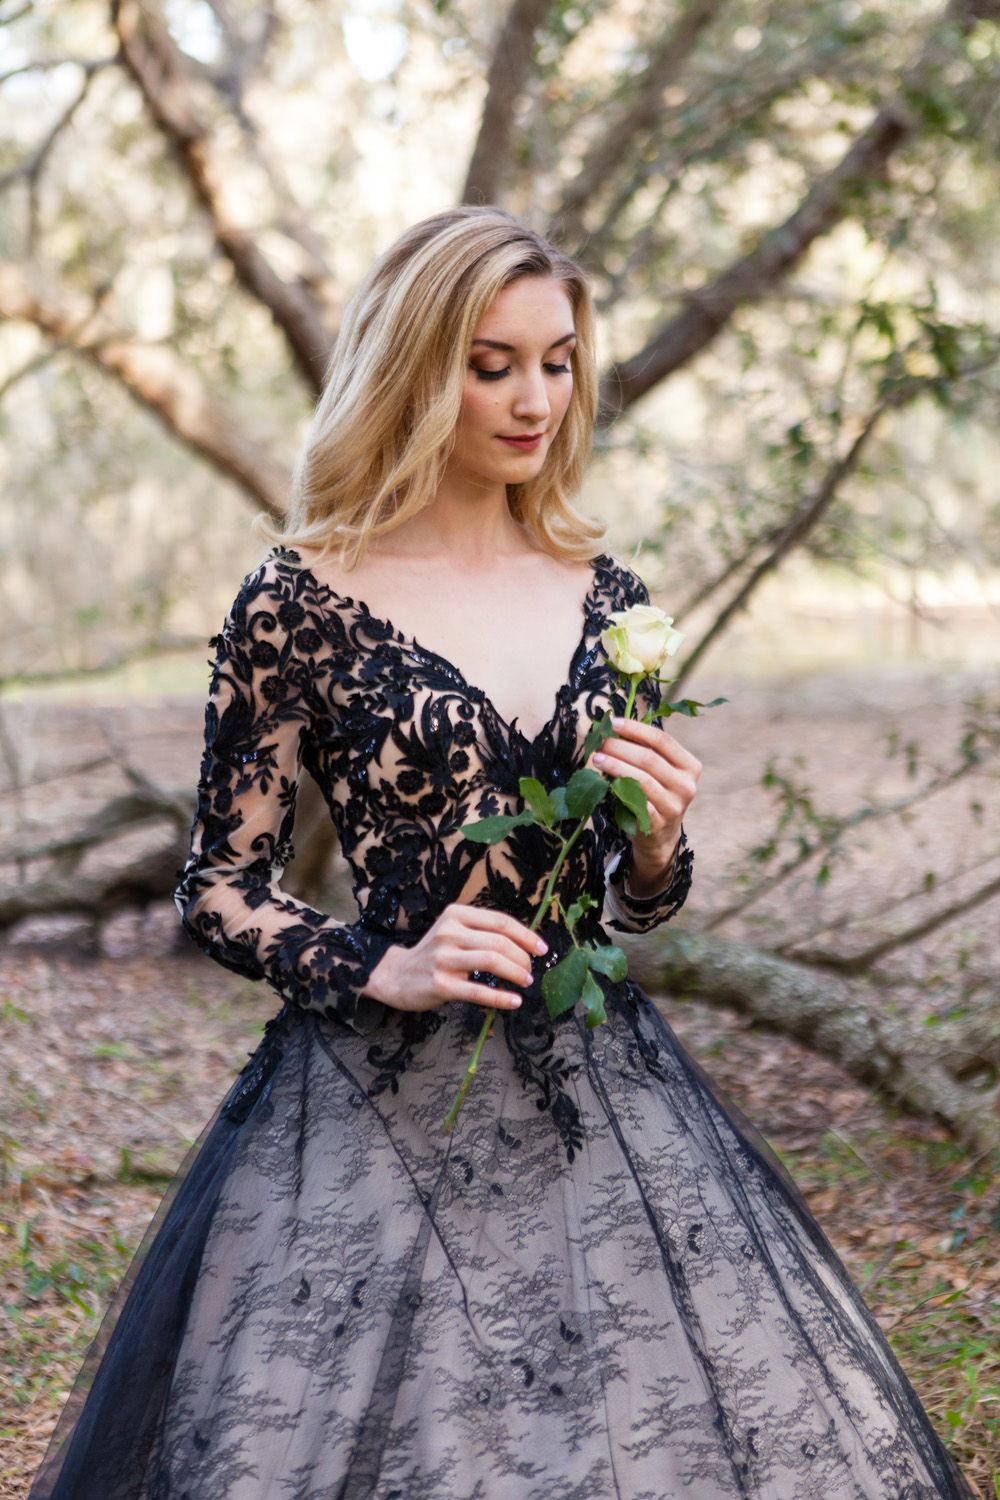  styled shoot with black wedding dress 